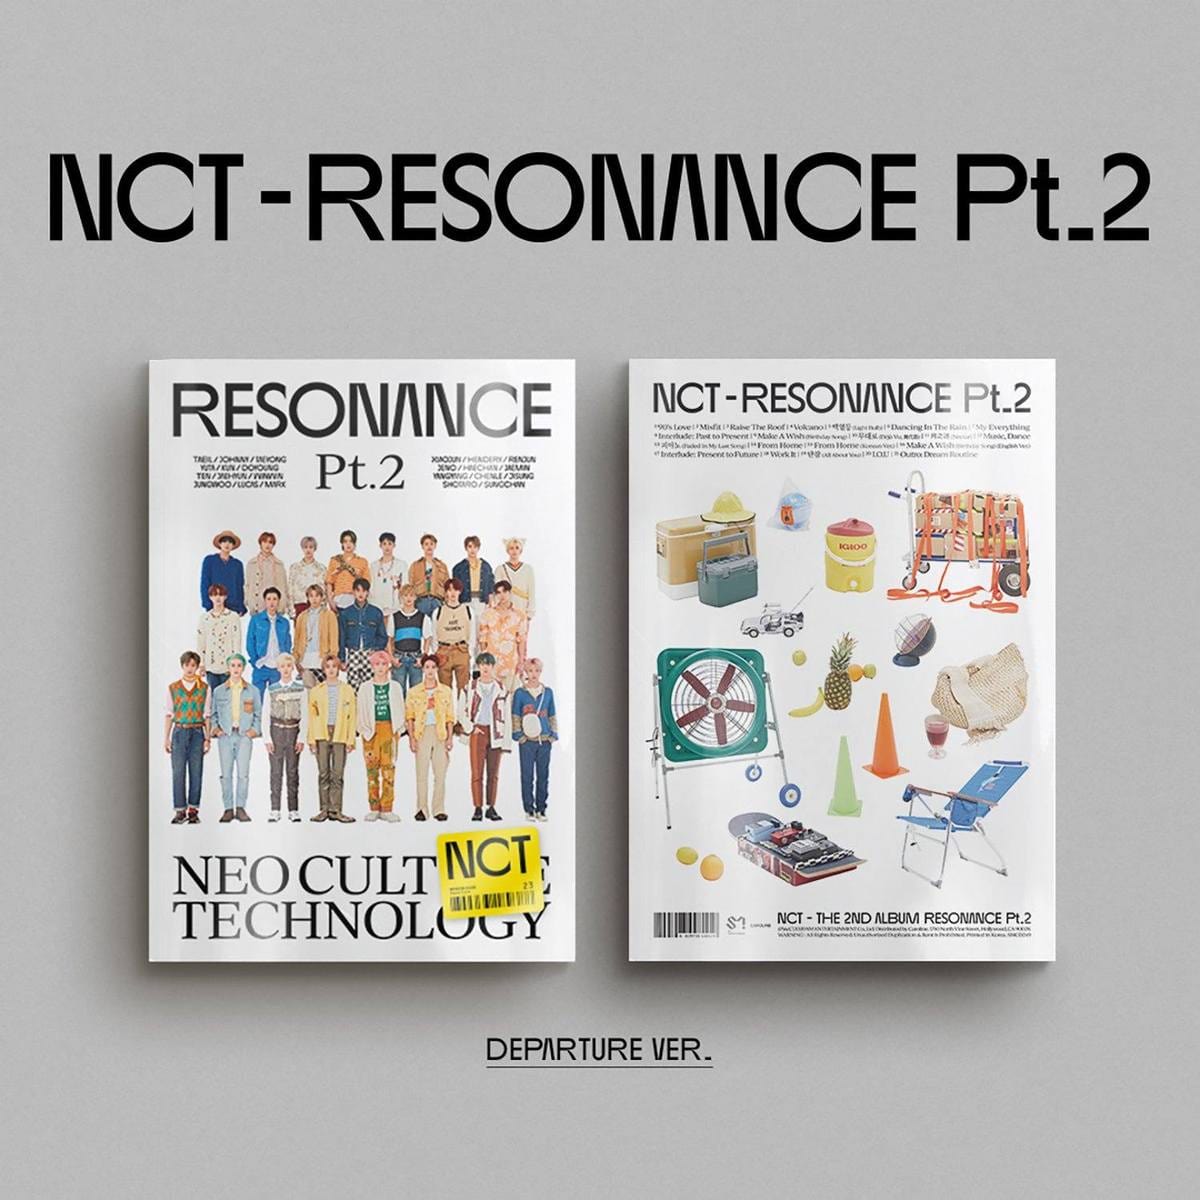 NCT - The 2nd Album Resonance Pt.2 (Departure Ver.)